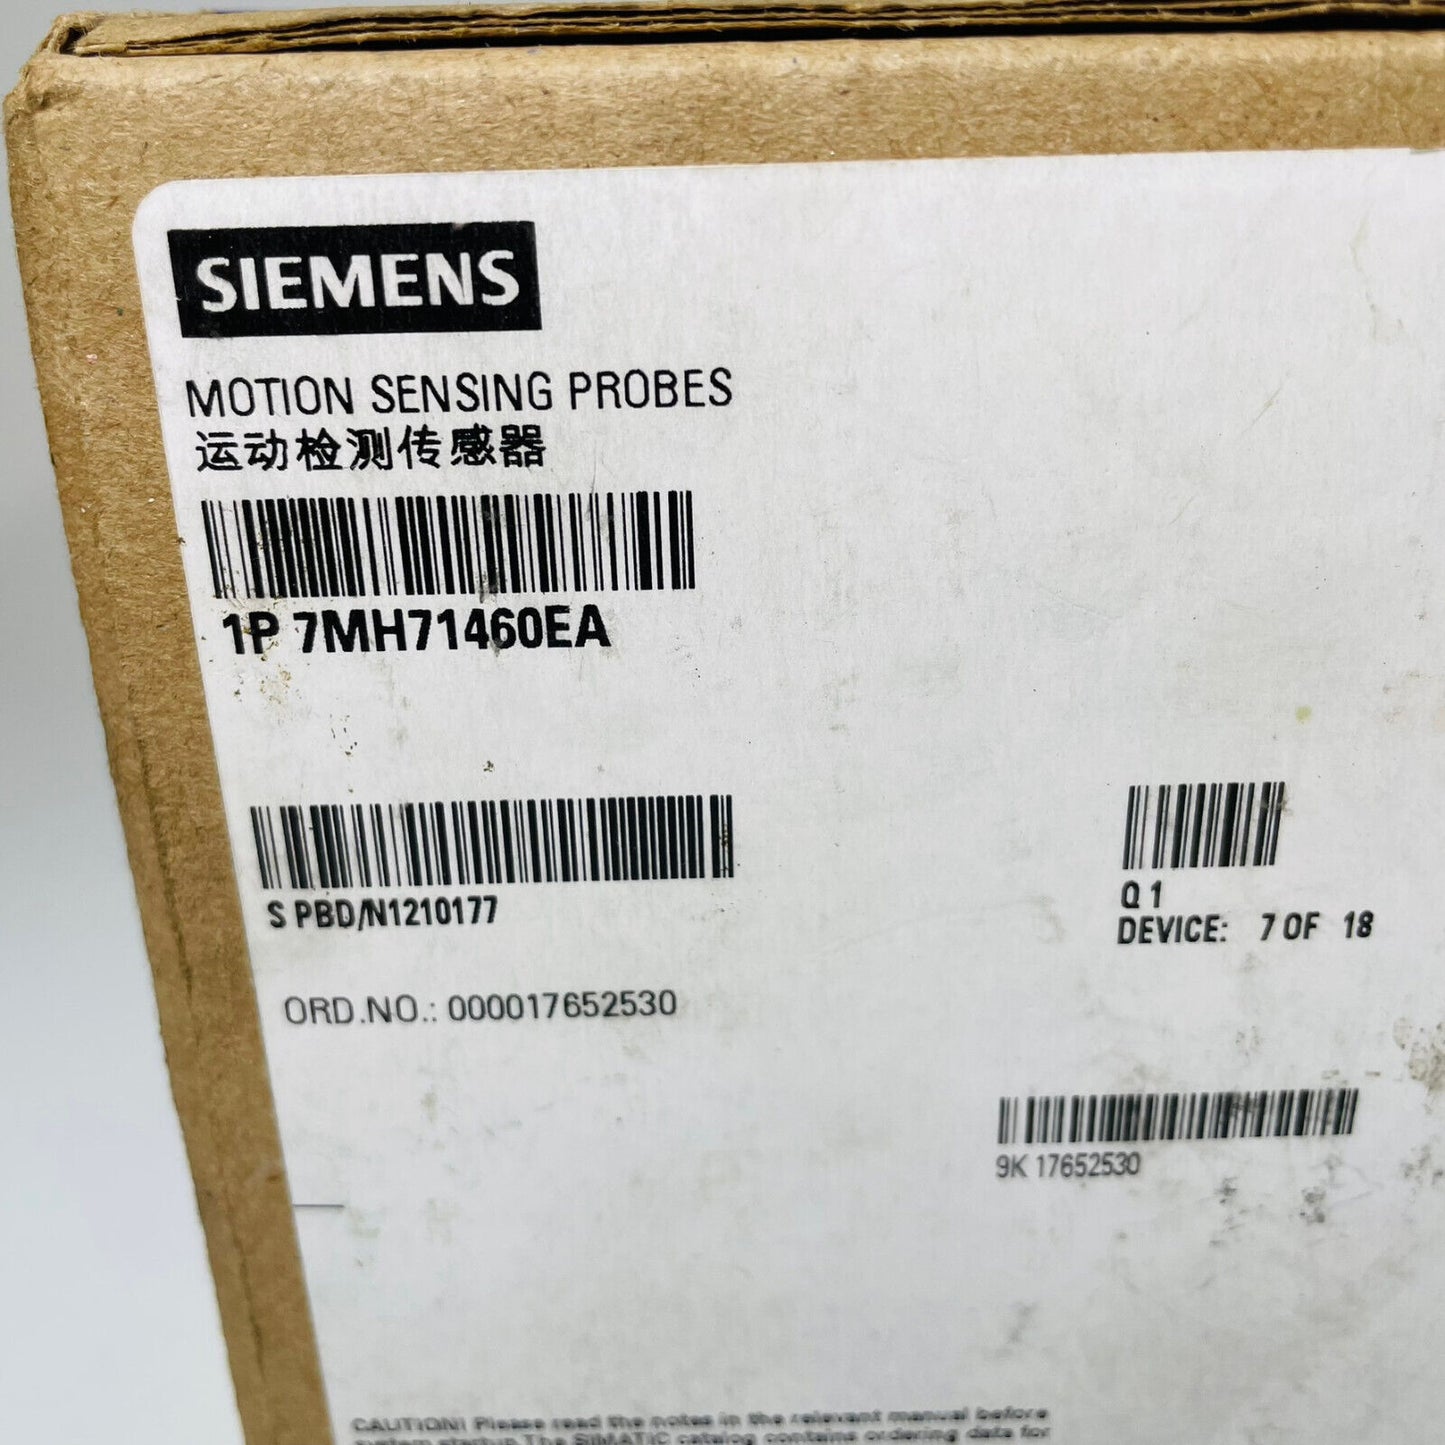 New Siemens 7MH71460EA MSP-12 Motion Sensing Probe